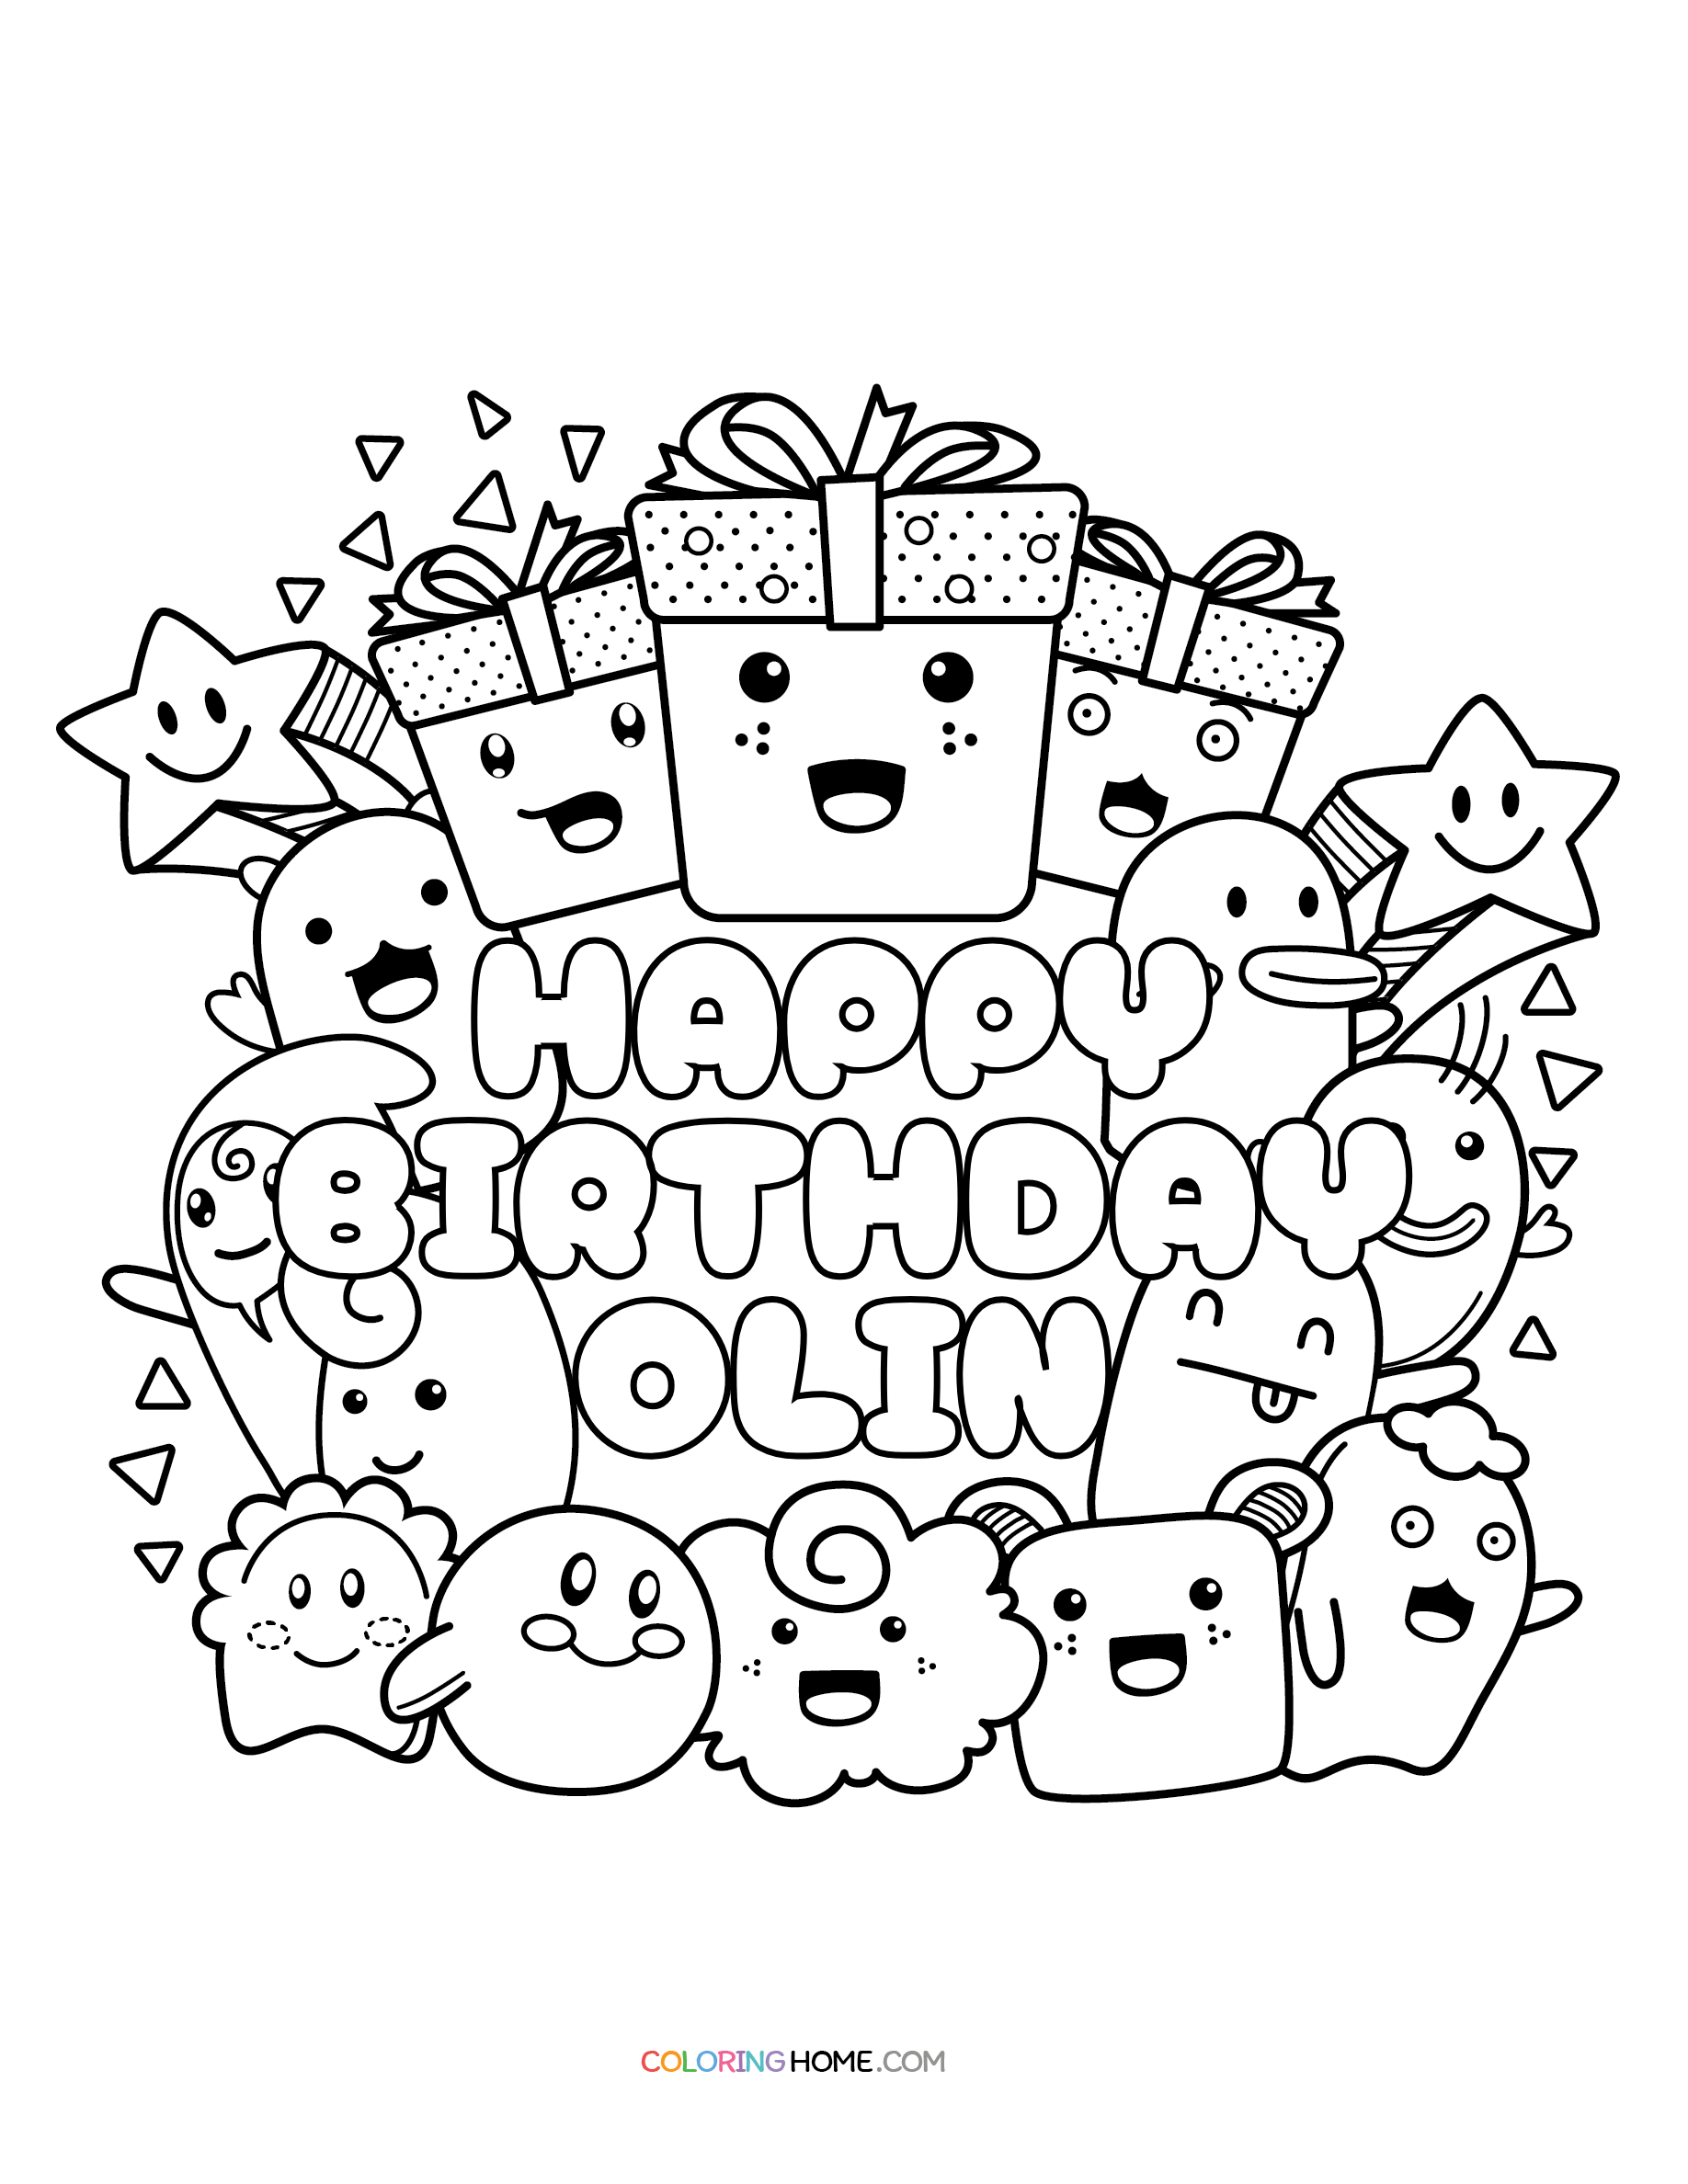 Happy Birthday Olin coloring page